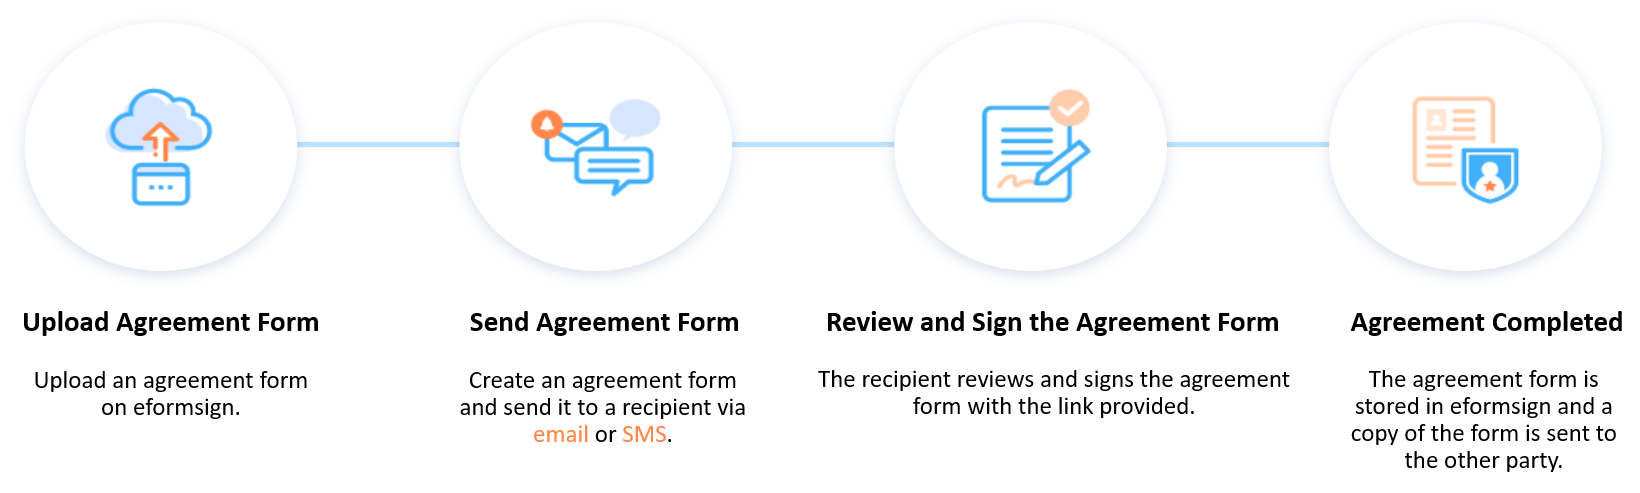 E-Agreement Process